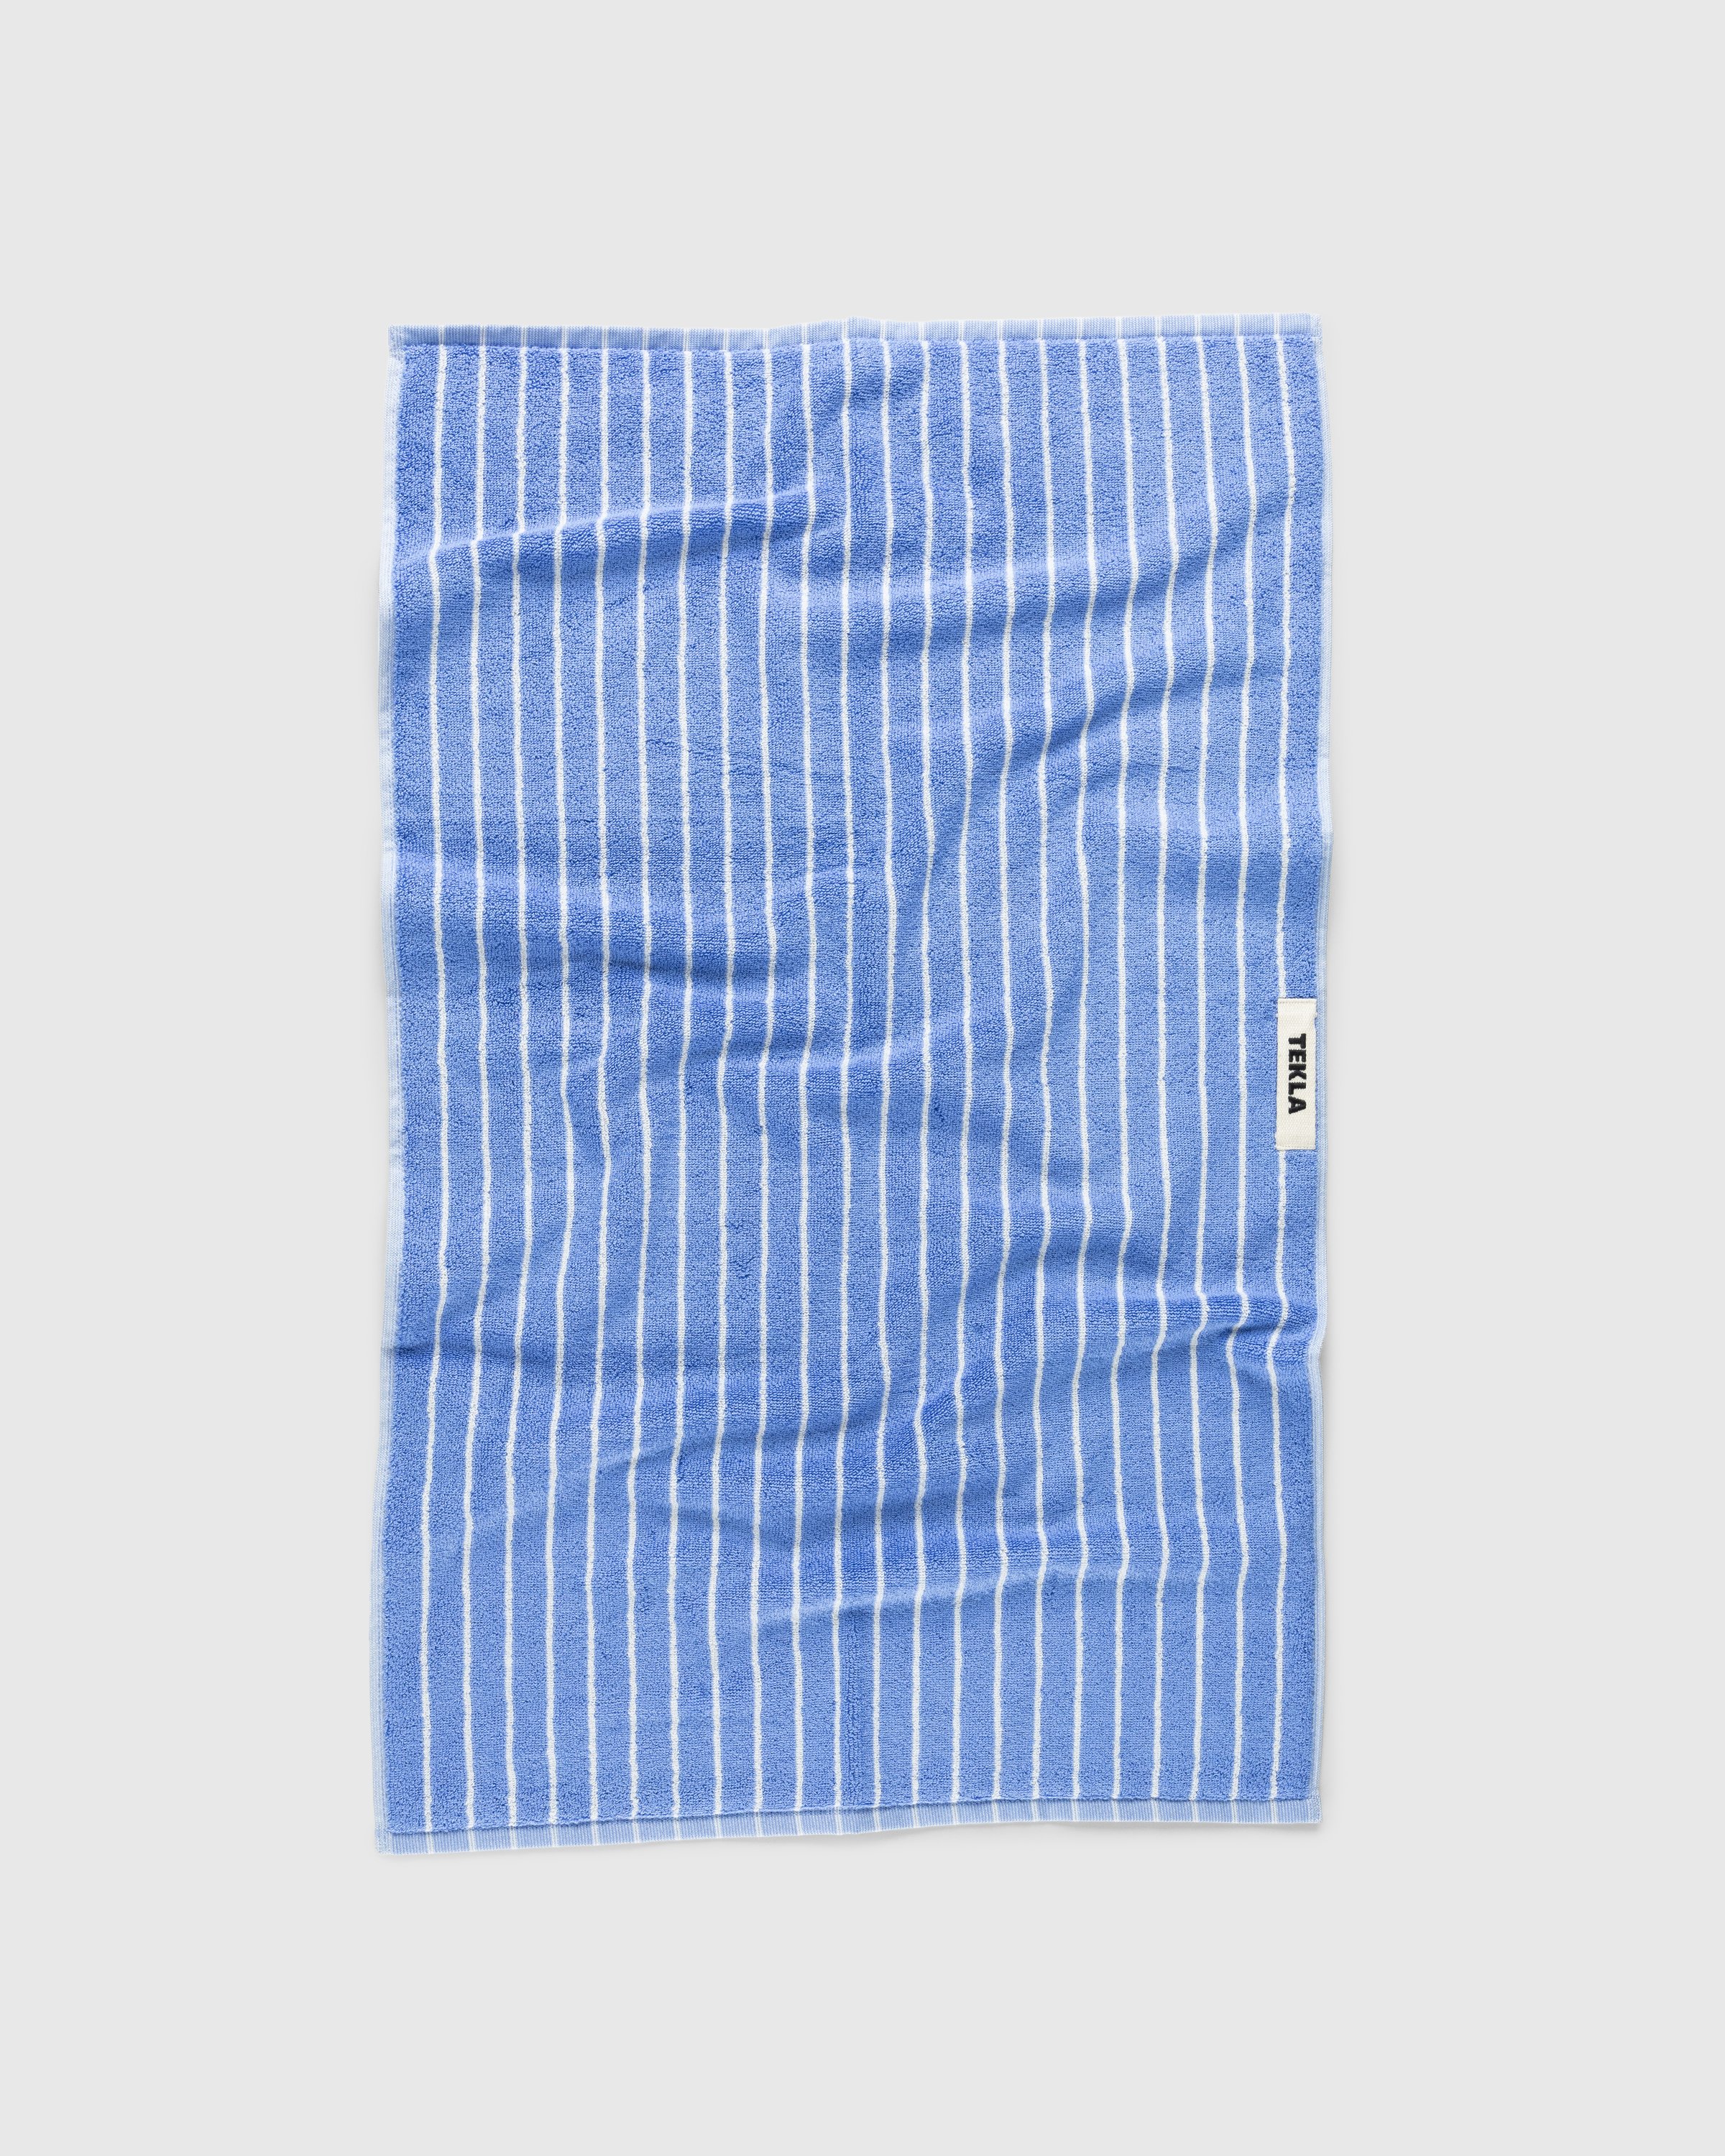 Tekla - Hand Towel 50x80 Clear Blue Stripes - Lifestyle - Blue - Image 1